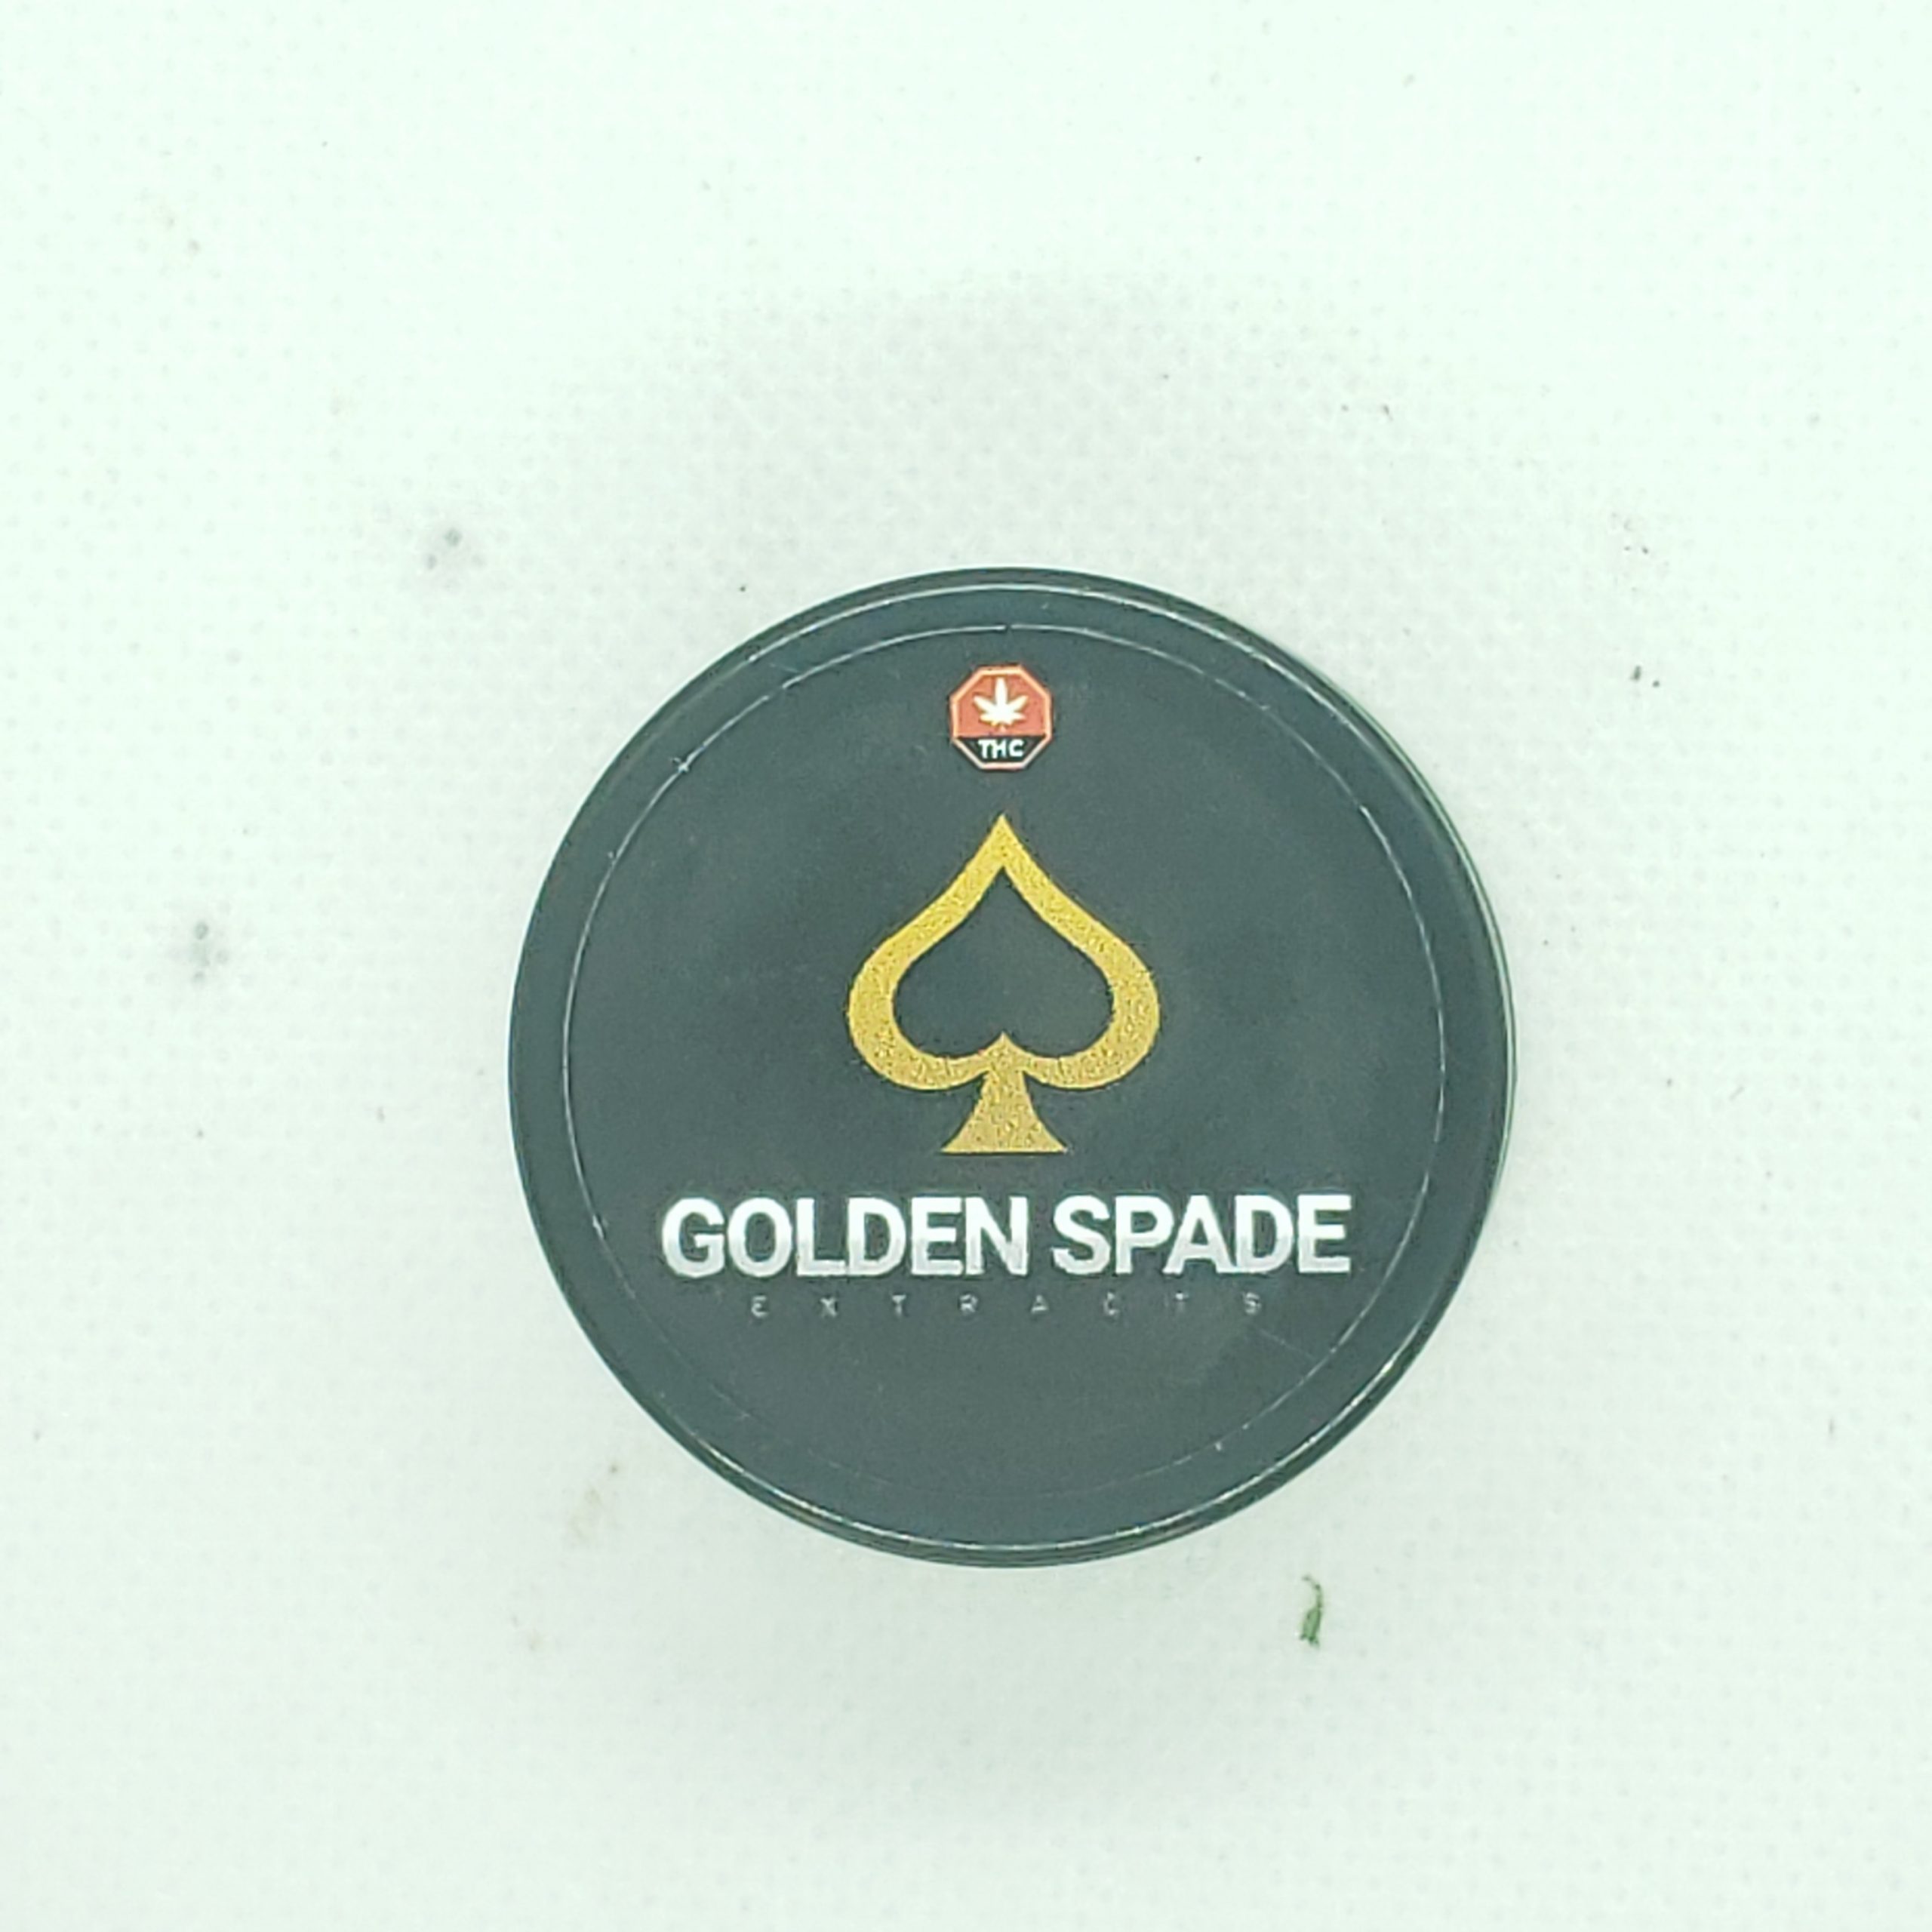 Golden Spade Extracts – Diamonds